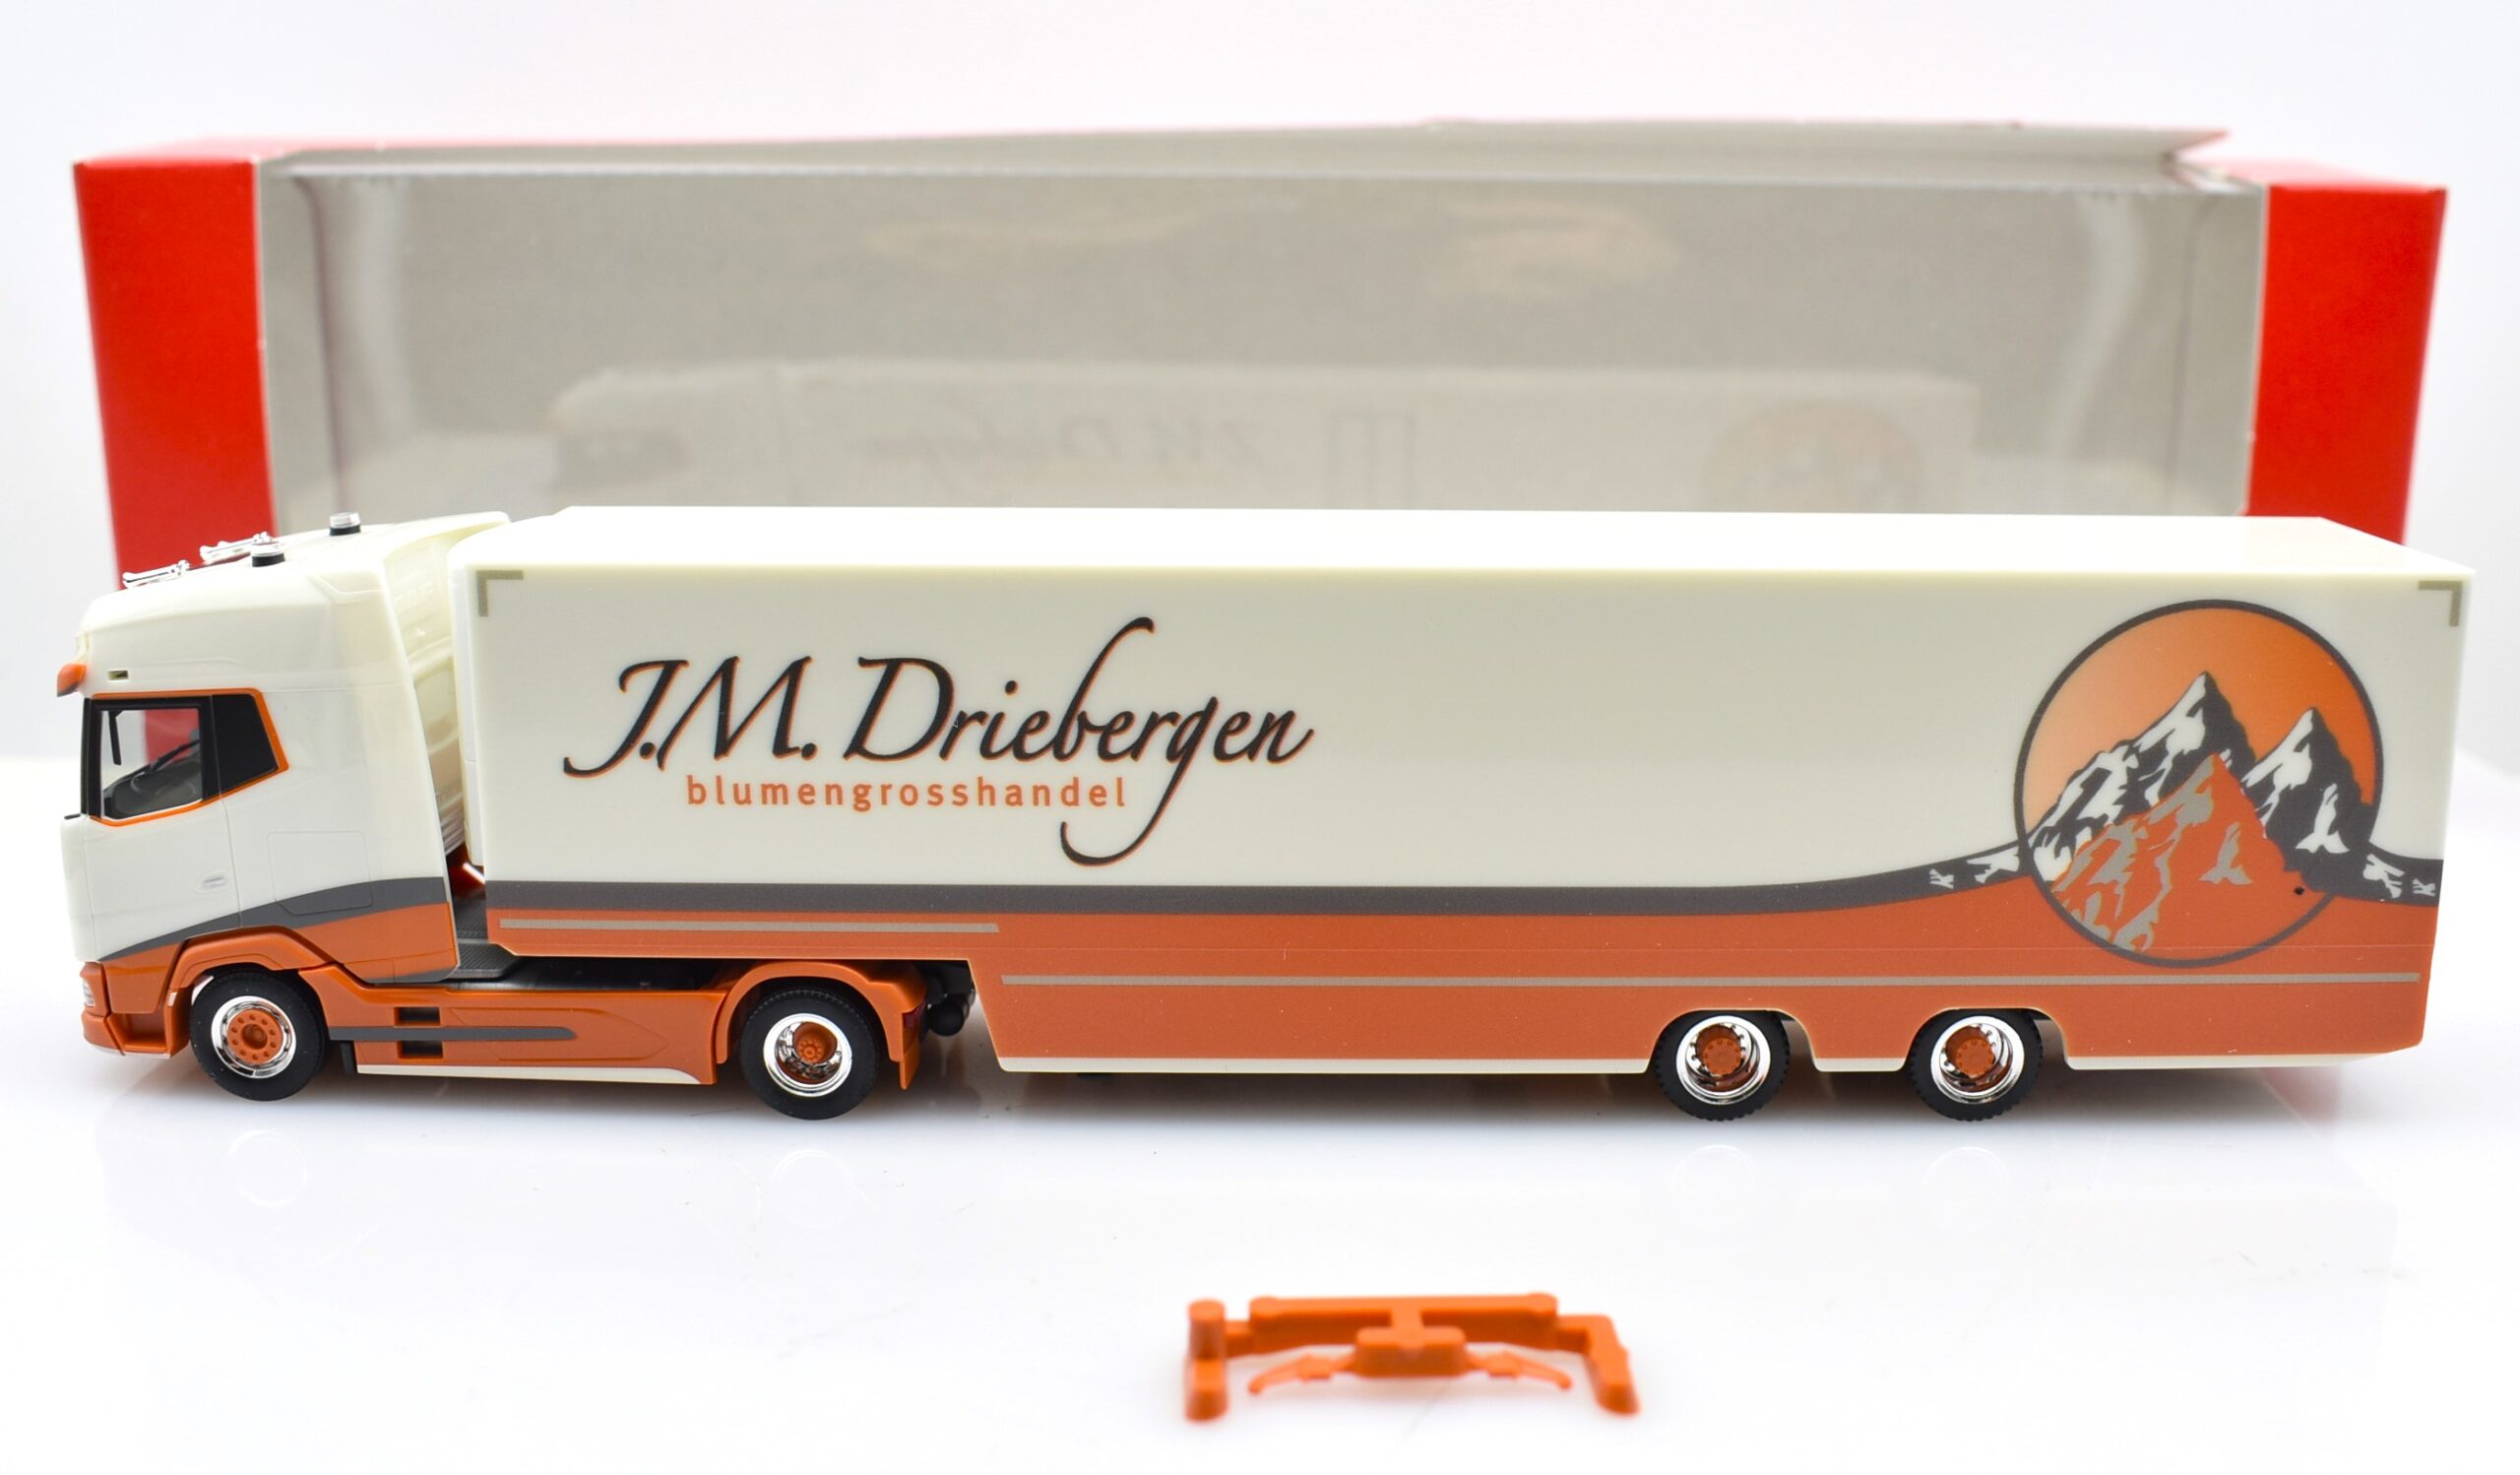 herpa modellino camion truck scala 1:87 DAF XG + SZ J. M. Driebergen modellismo